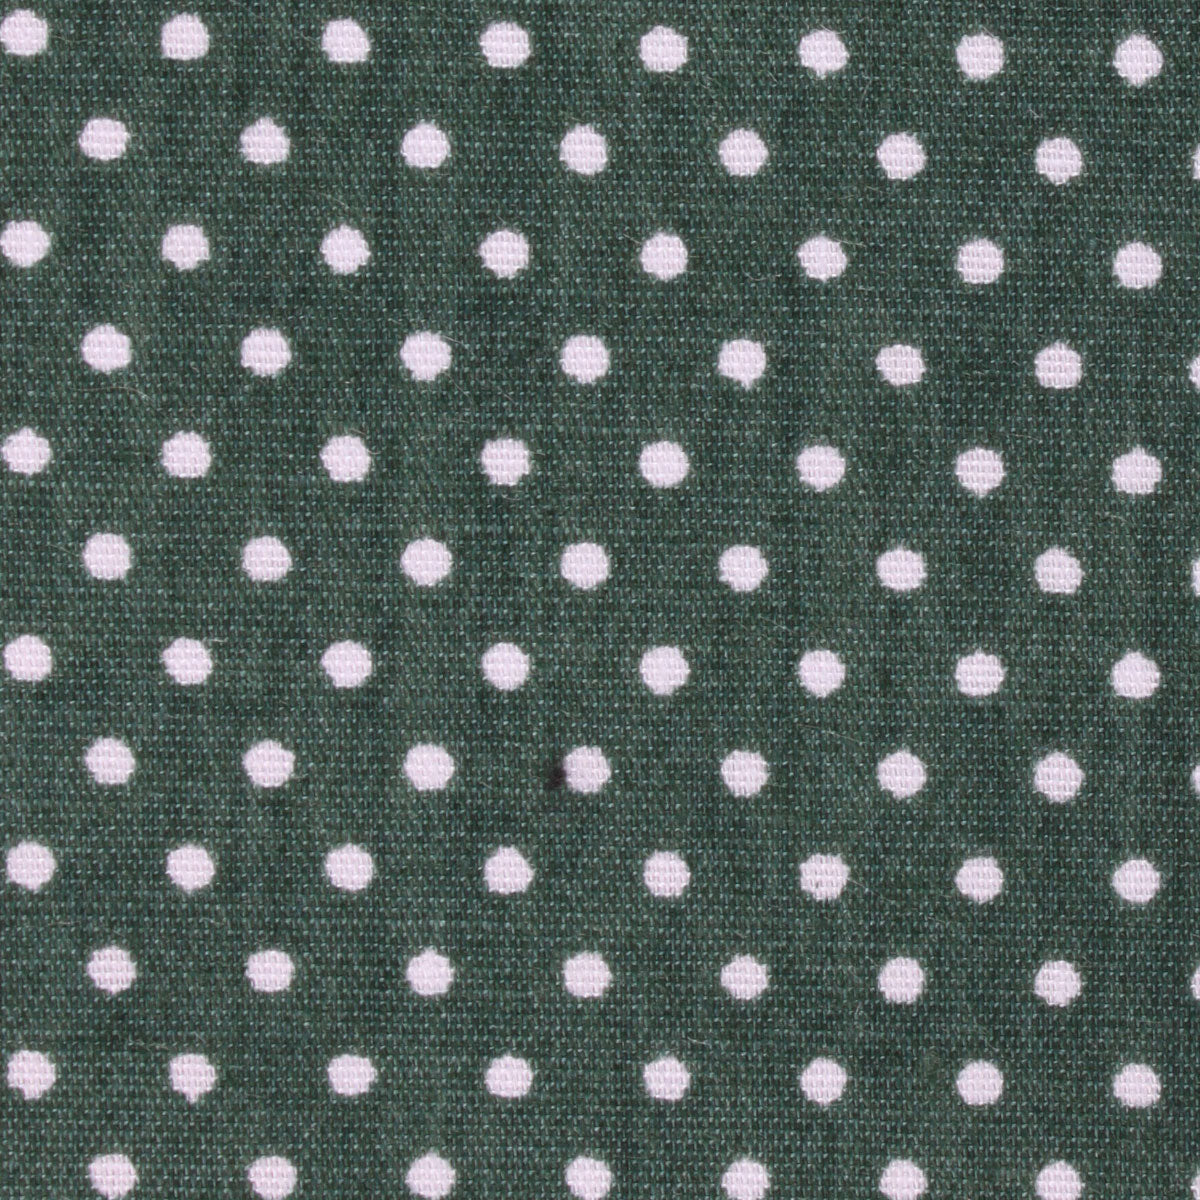 Olive Green Polka Dot Cotton Fabric Kids Bowtie